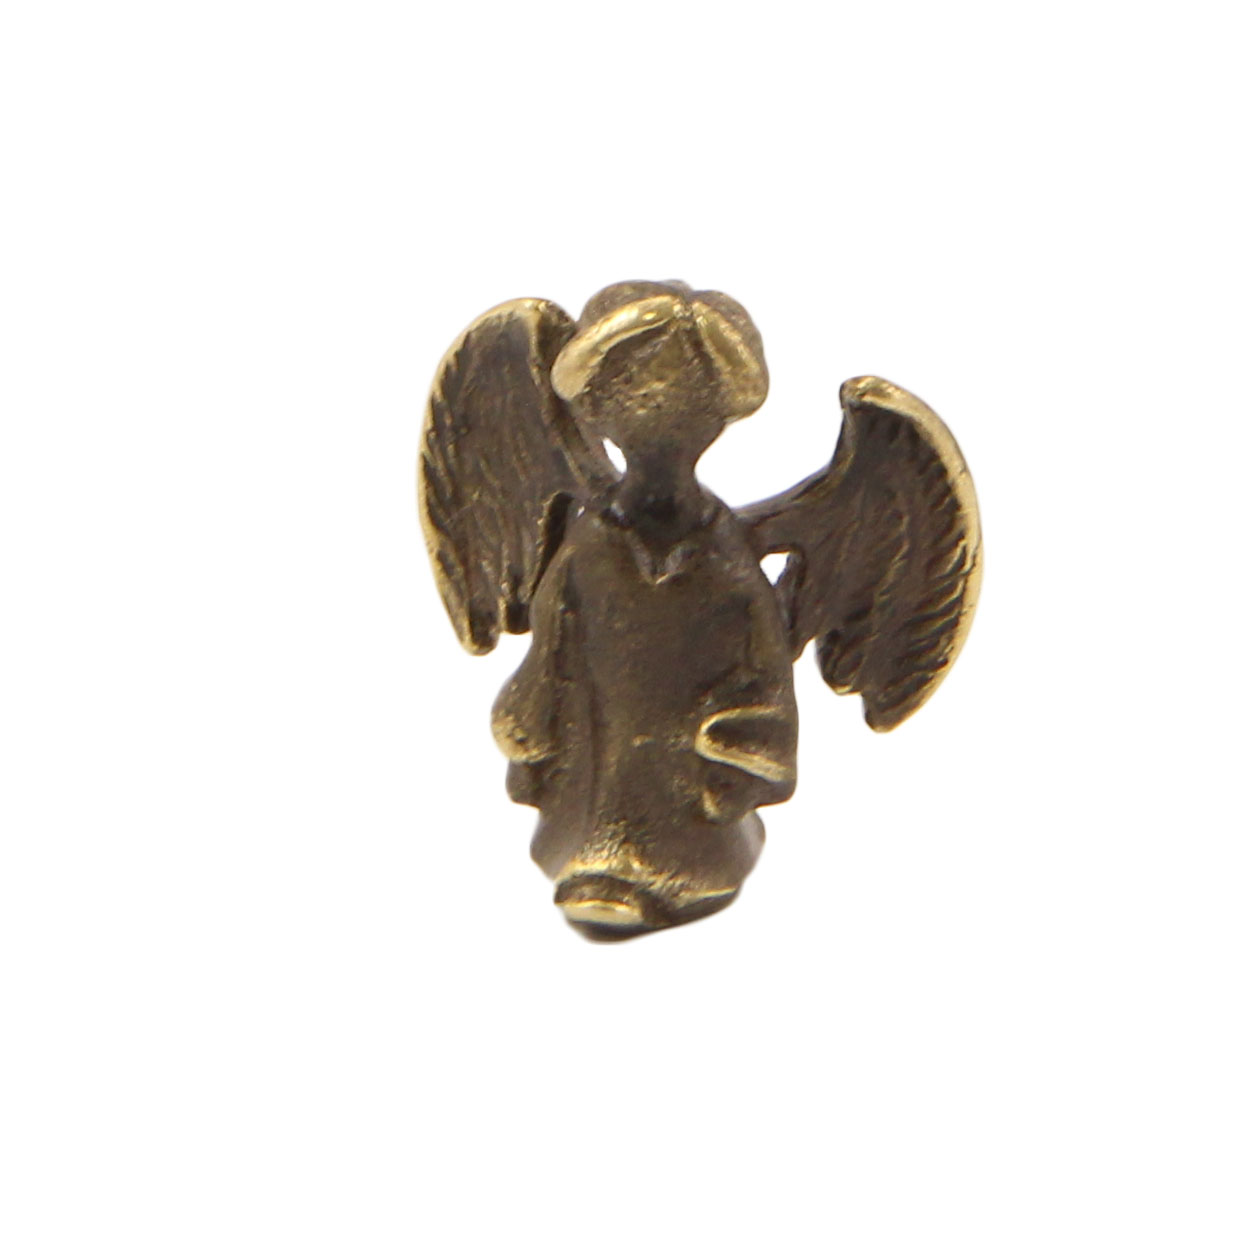 Бронзовый сувенир Ангел безликий малыйФото 15455-11.jpg